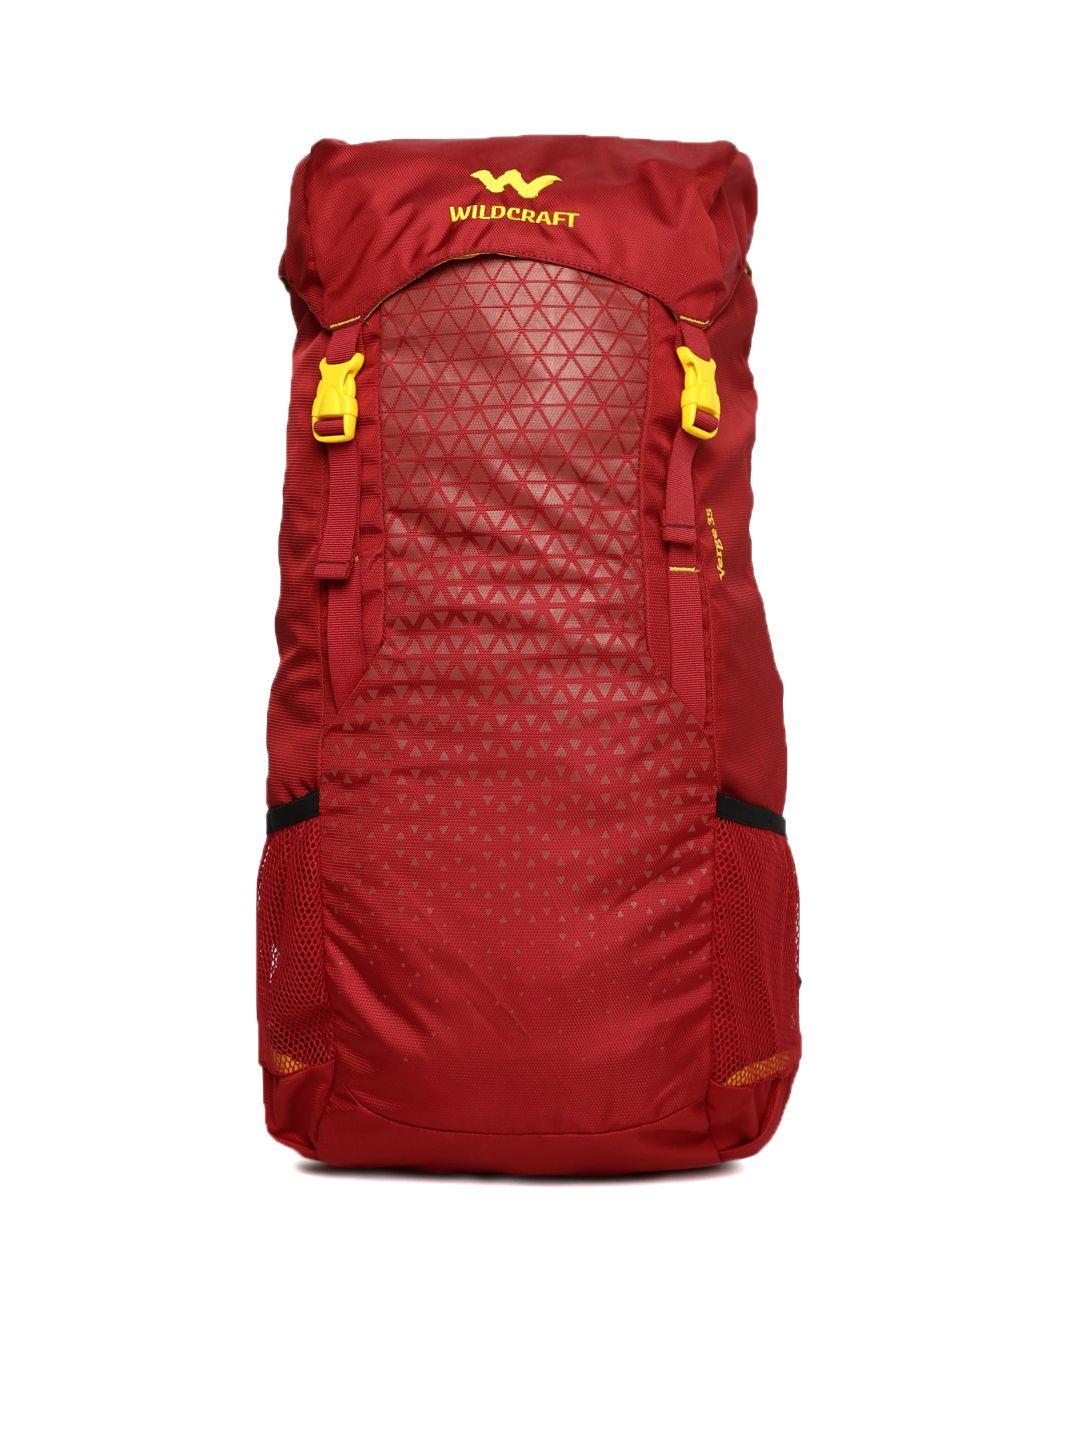 wildcraft unisex red verge 35 printed rucksack